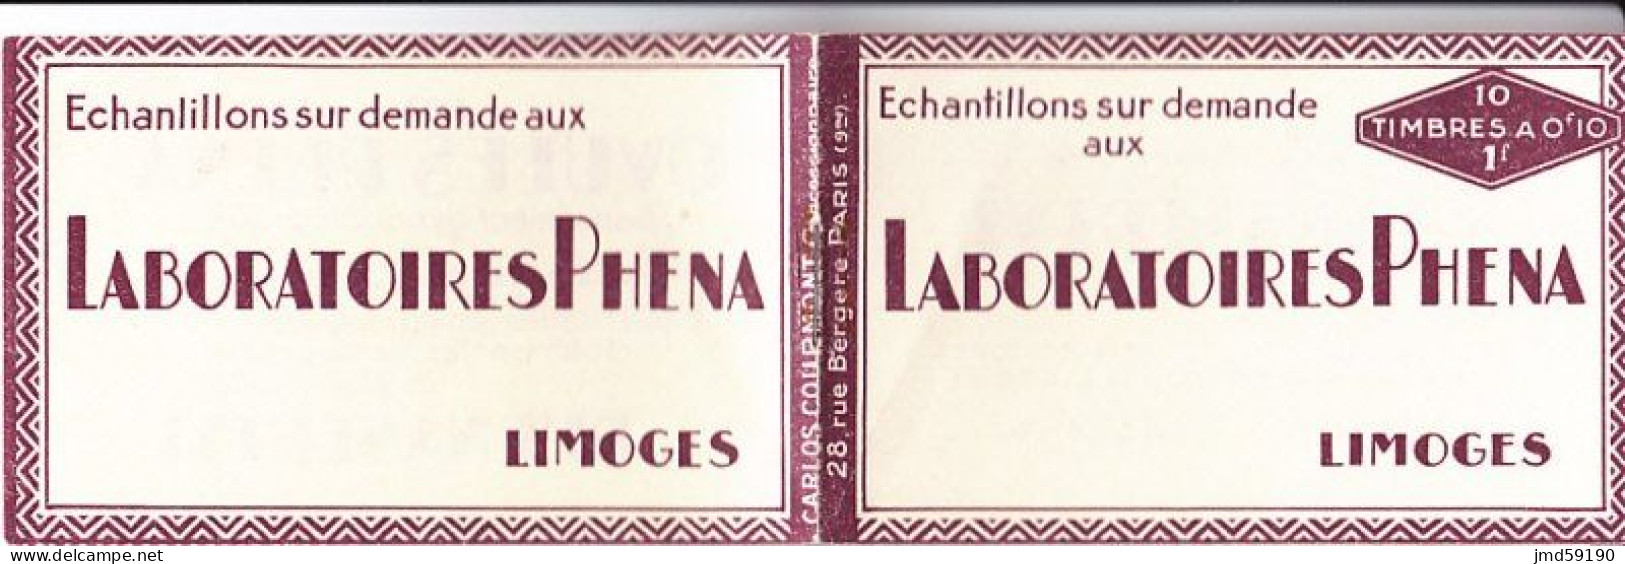 Couverture Seule Du Carnet PHENA - Unused Stamps